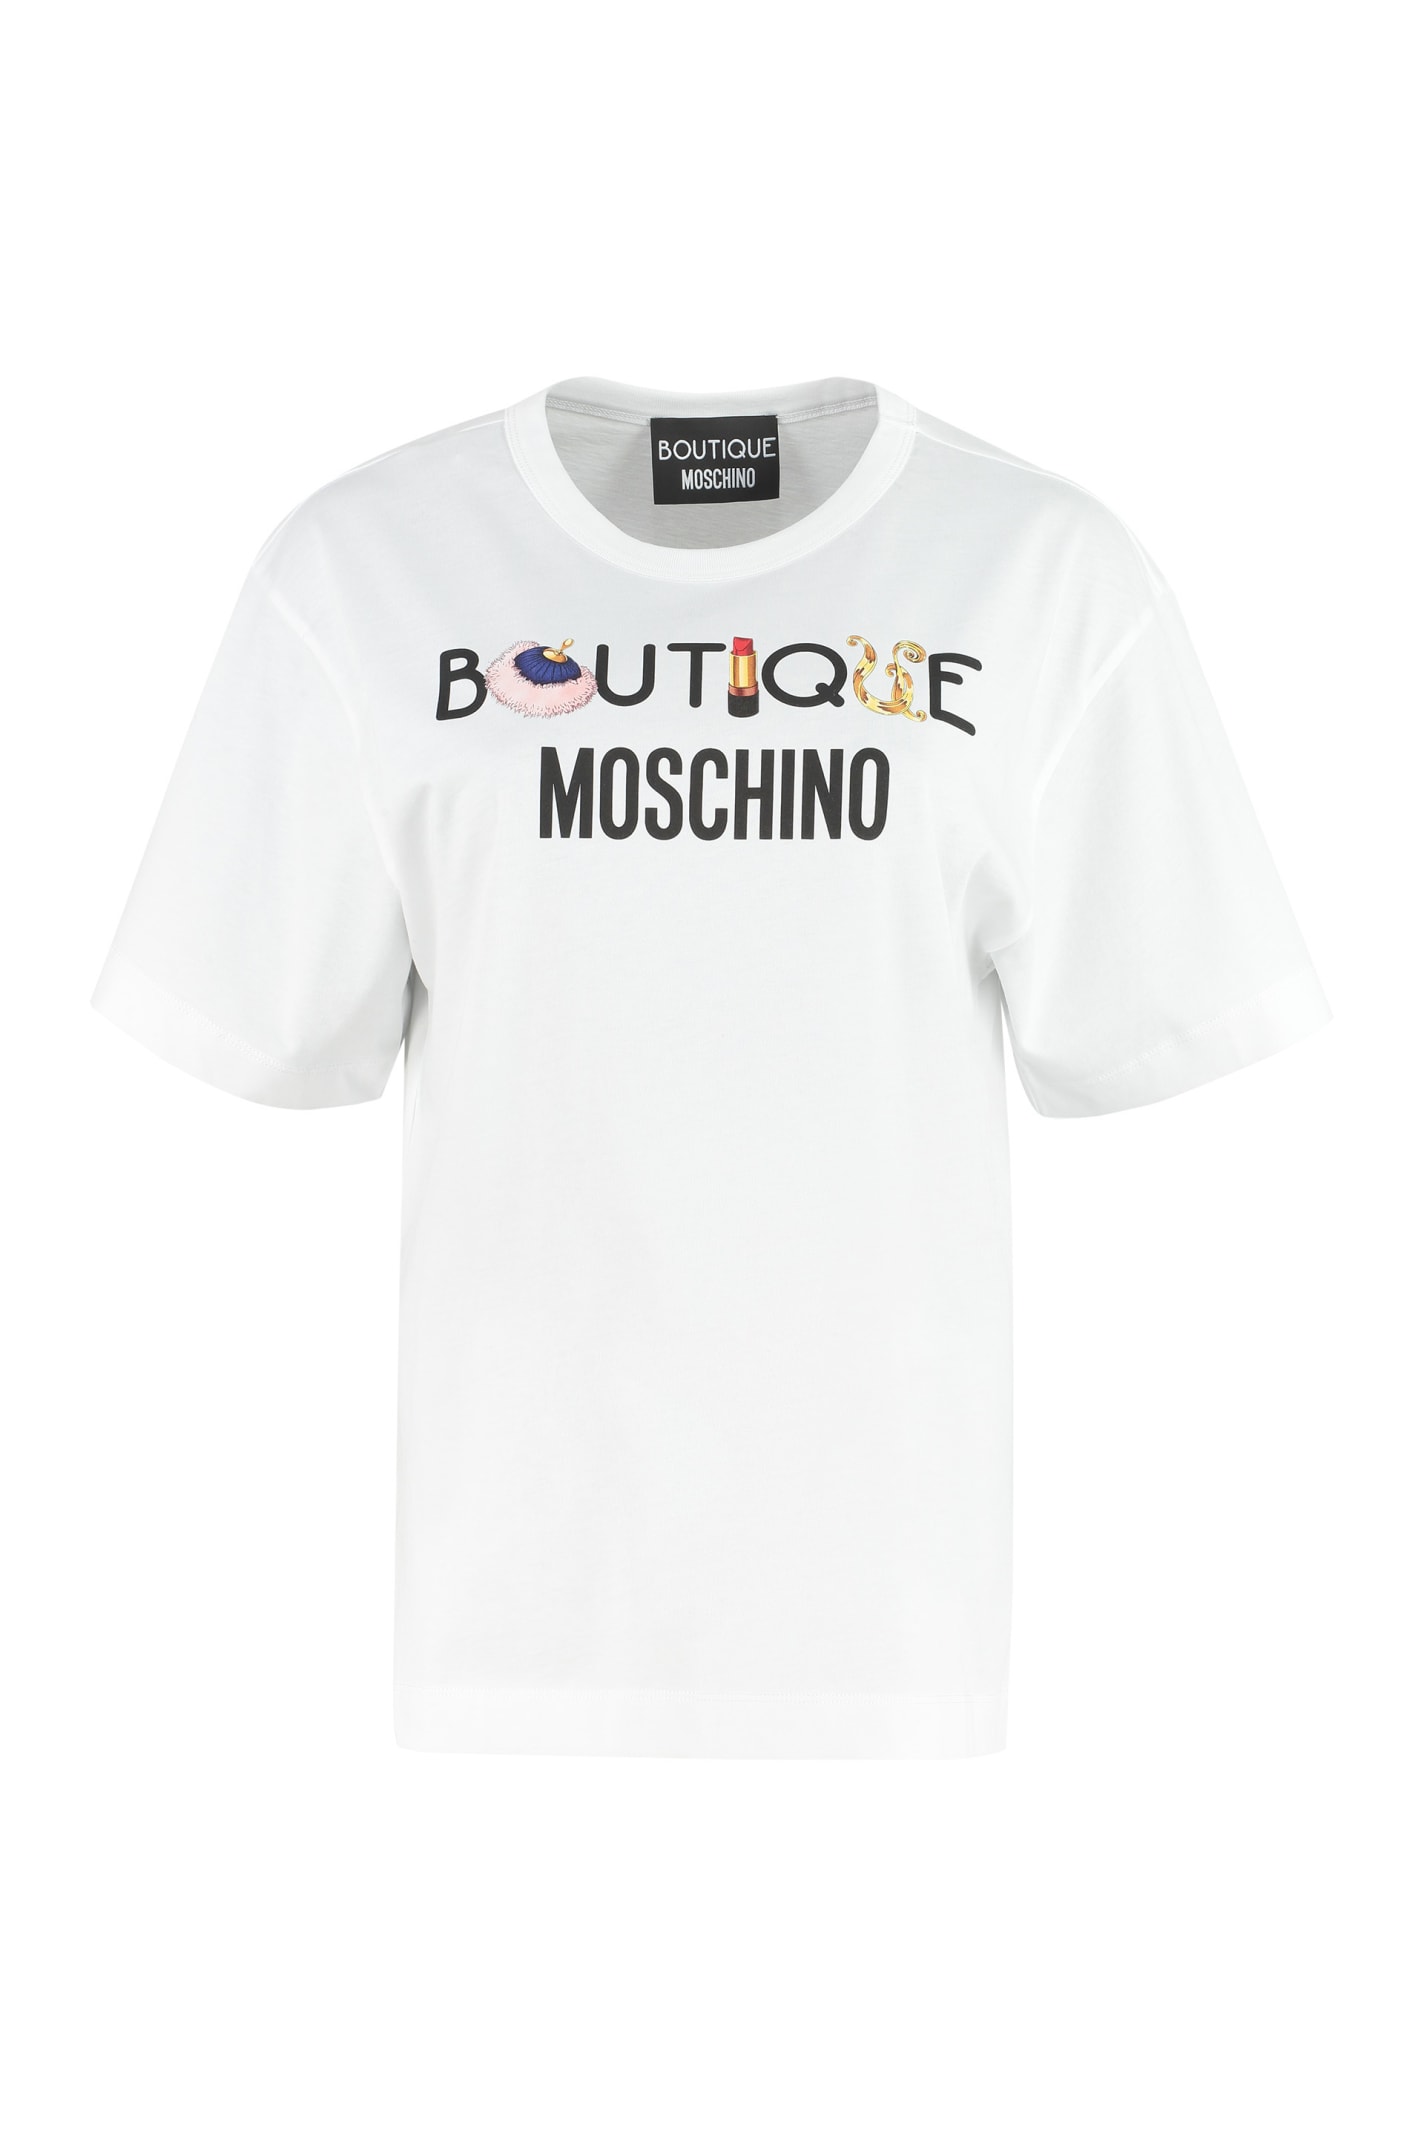 Boutique Moschino Cotton Crew-neck T-shirt